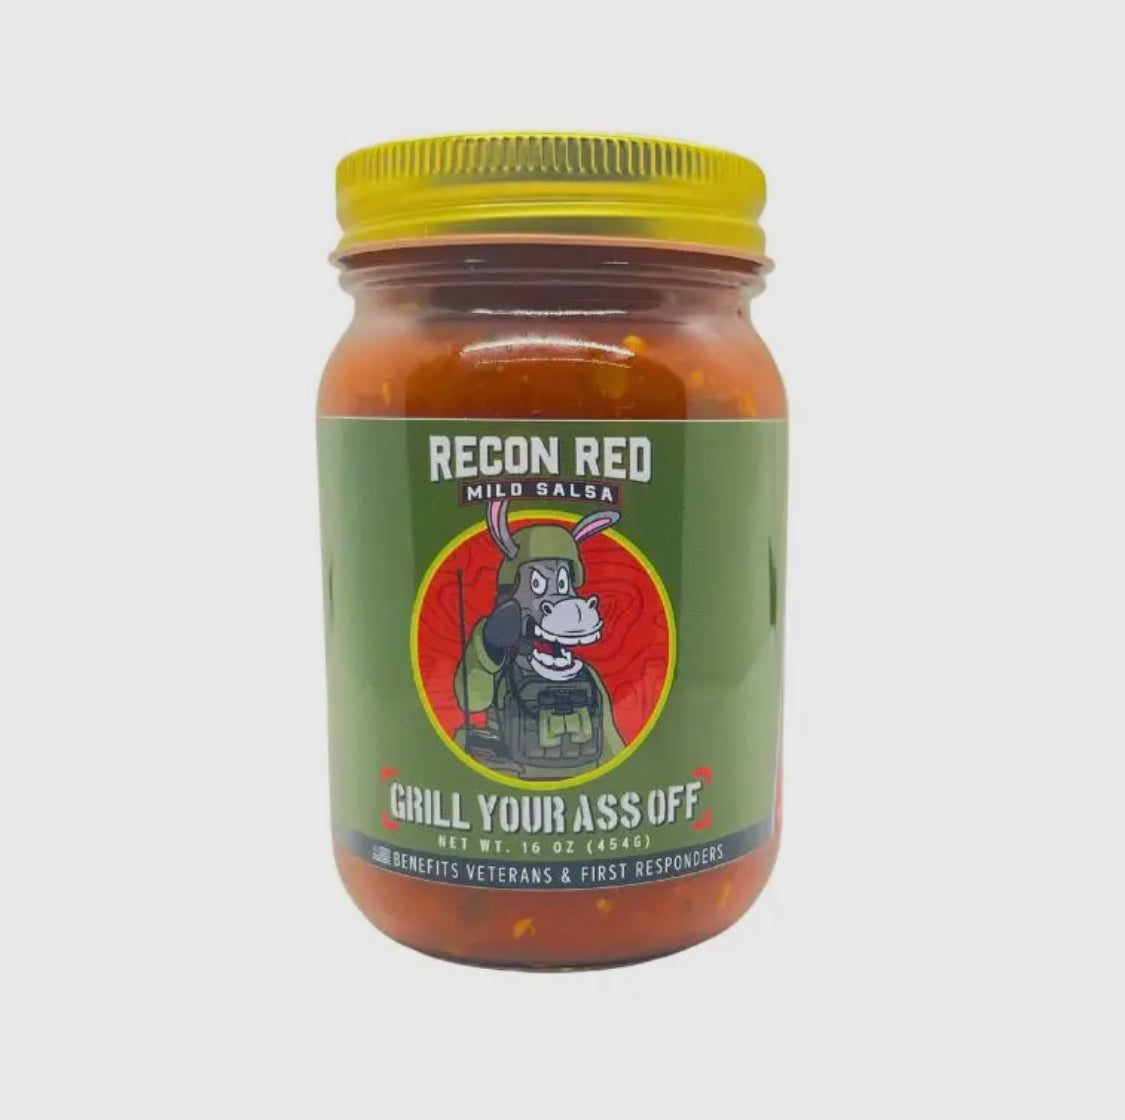 Recon red mild salsa